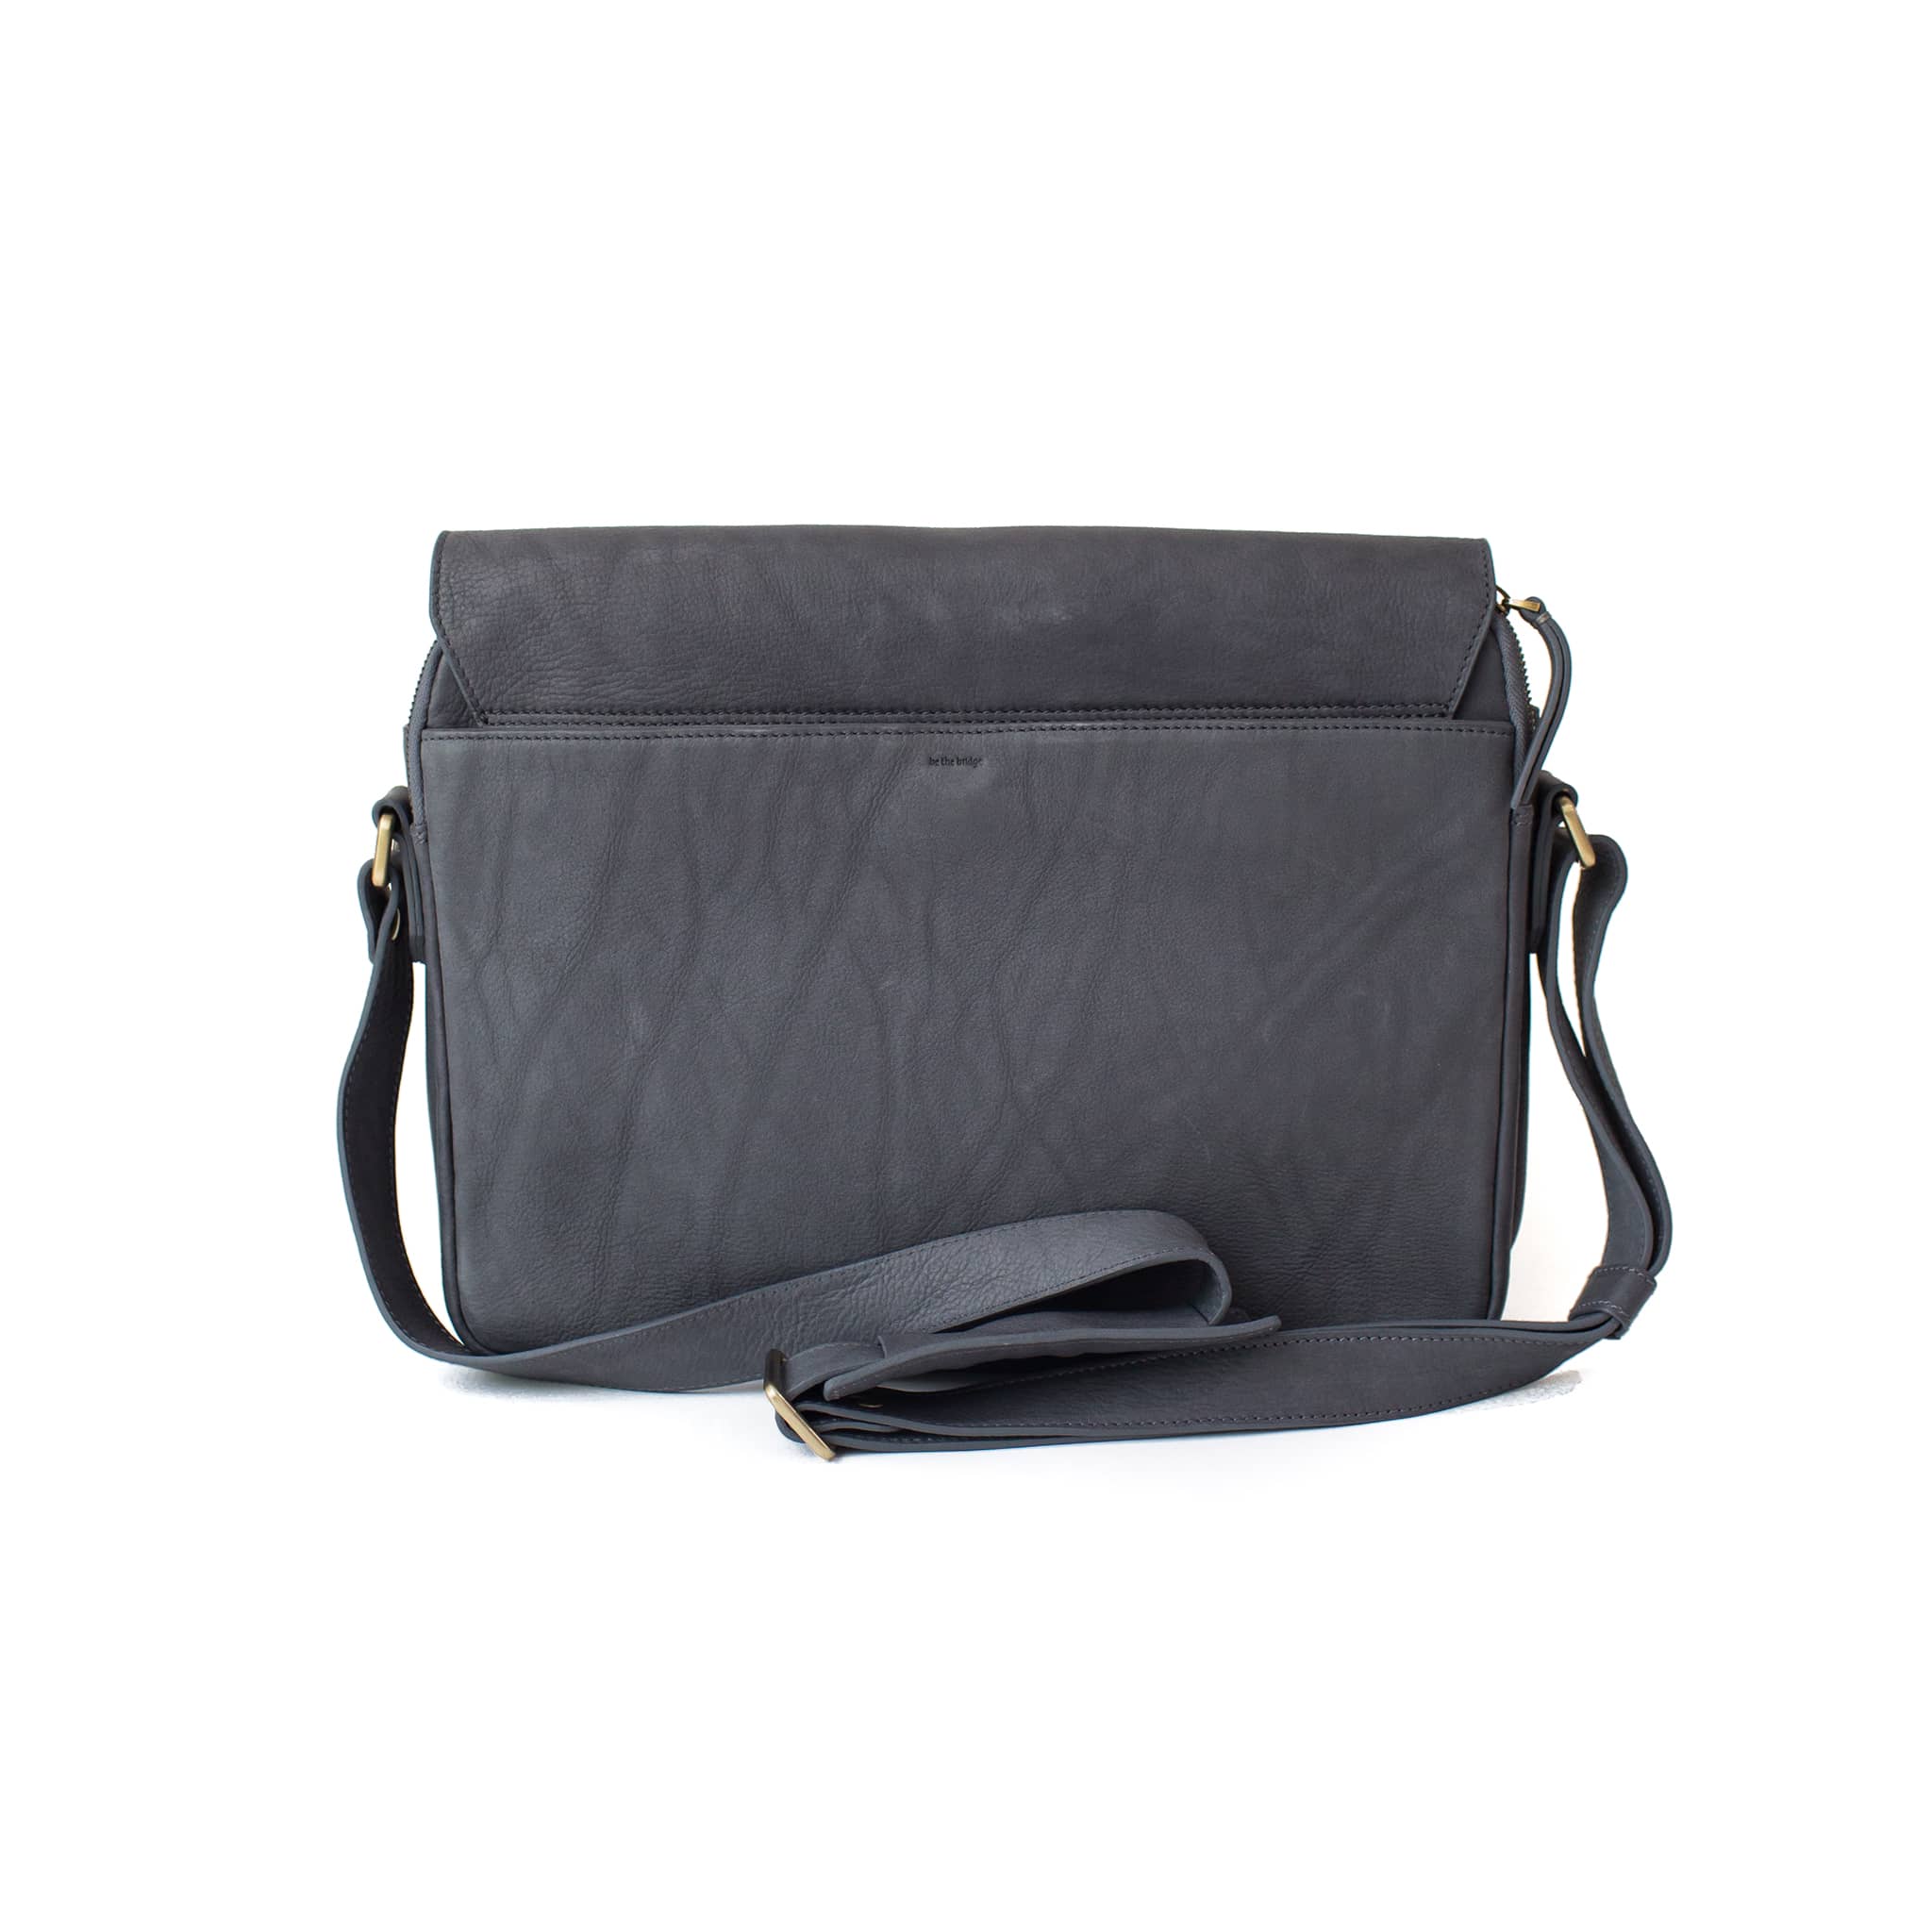 Ford messenger unisex gray raw leather bag has a magnetized bonus back pocket.